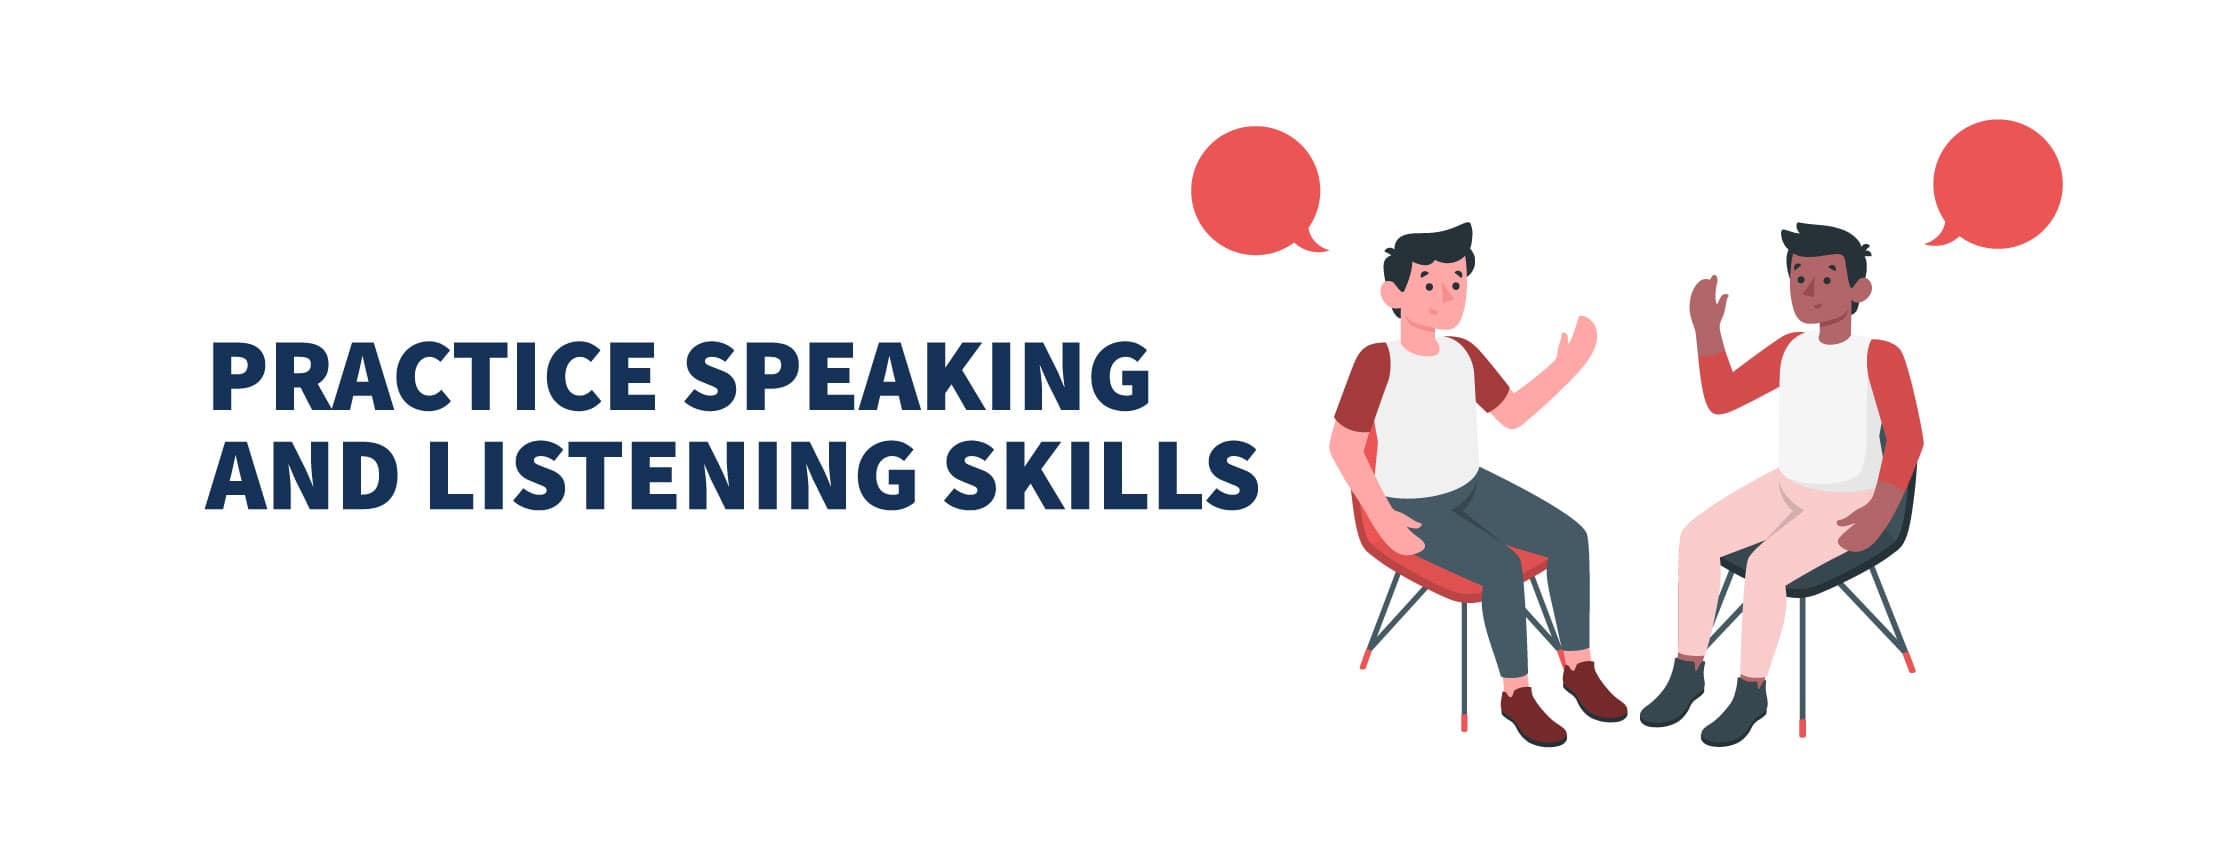 Practice Speaking and Listening Skills